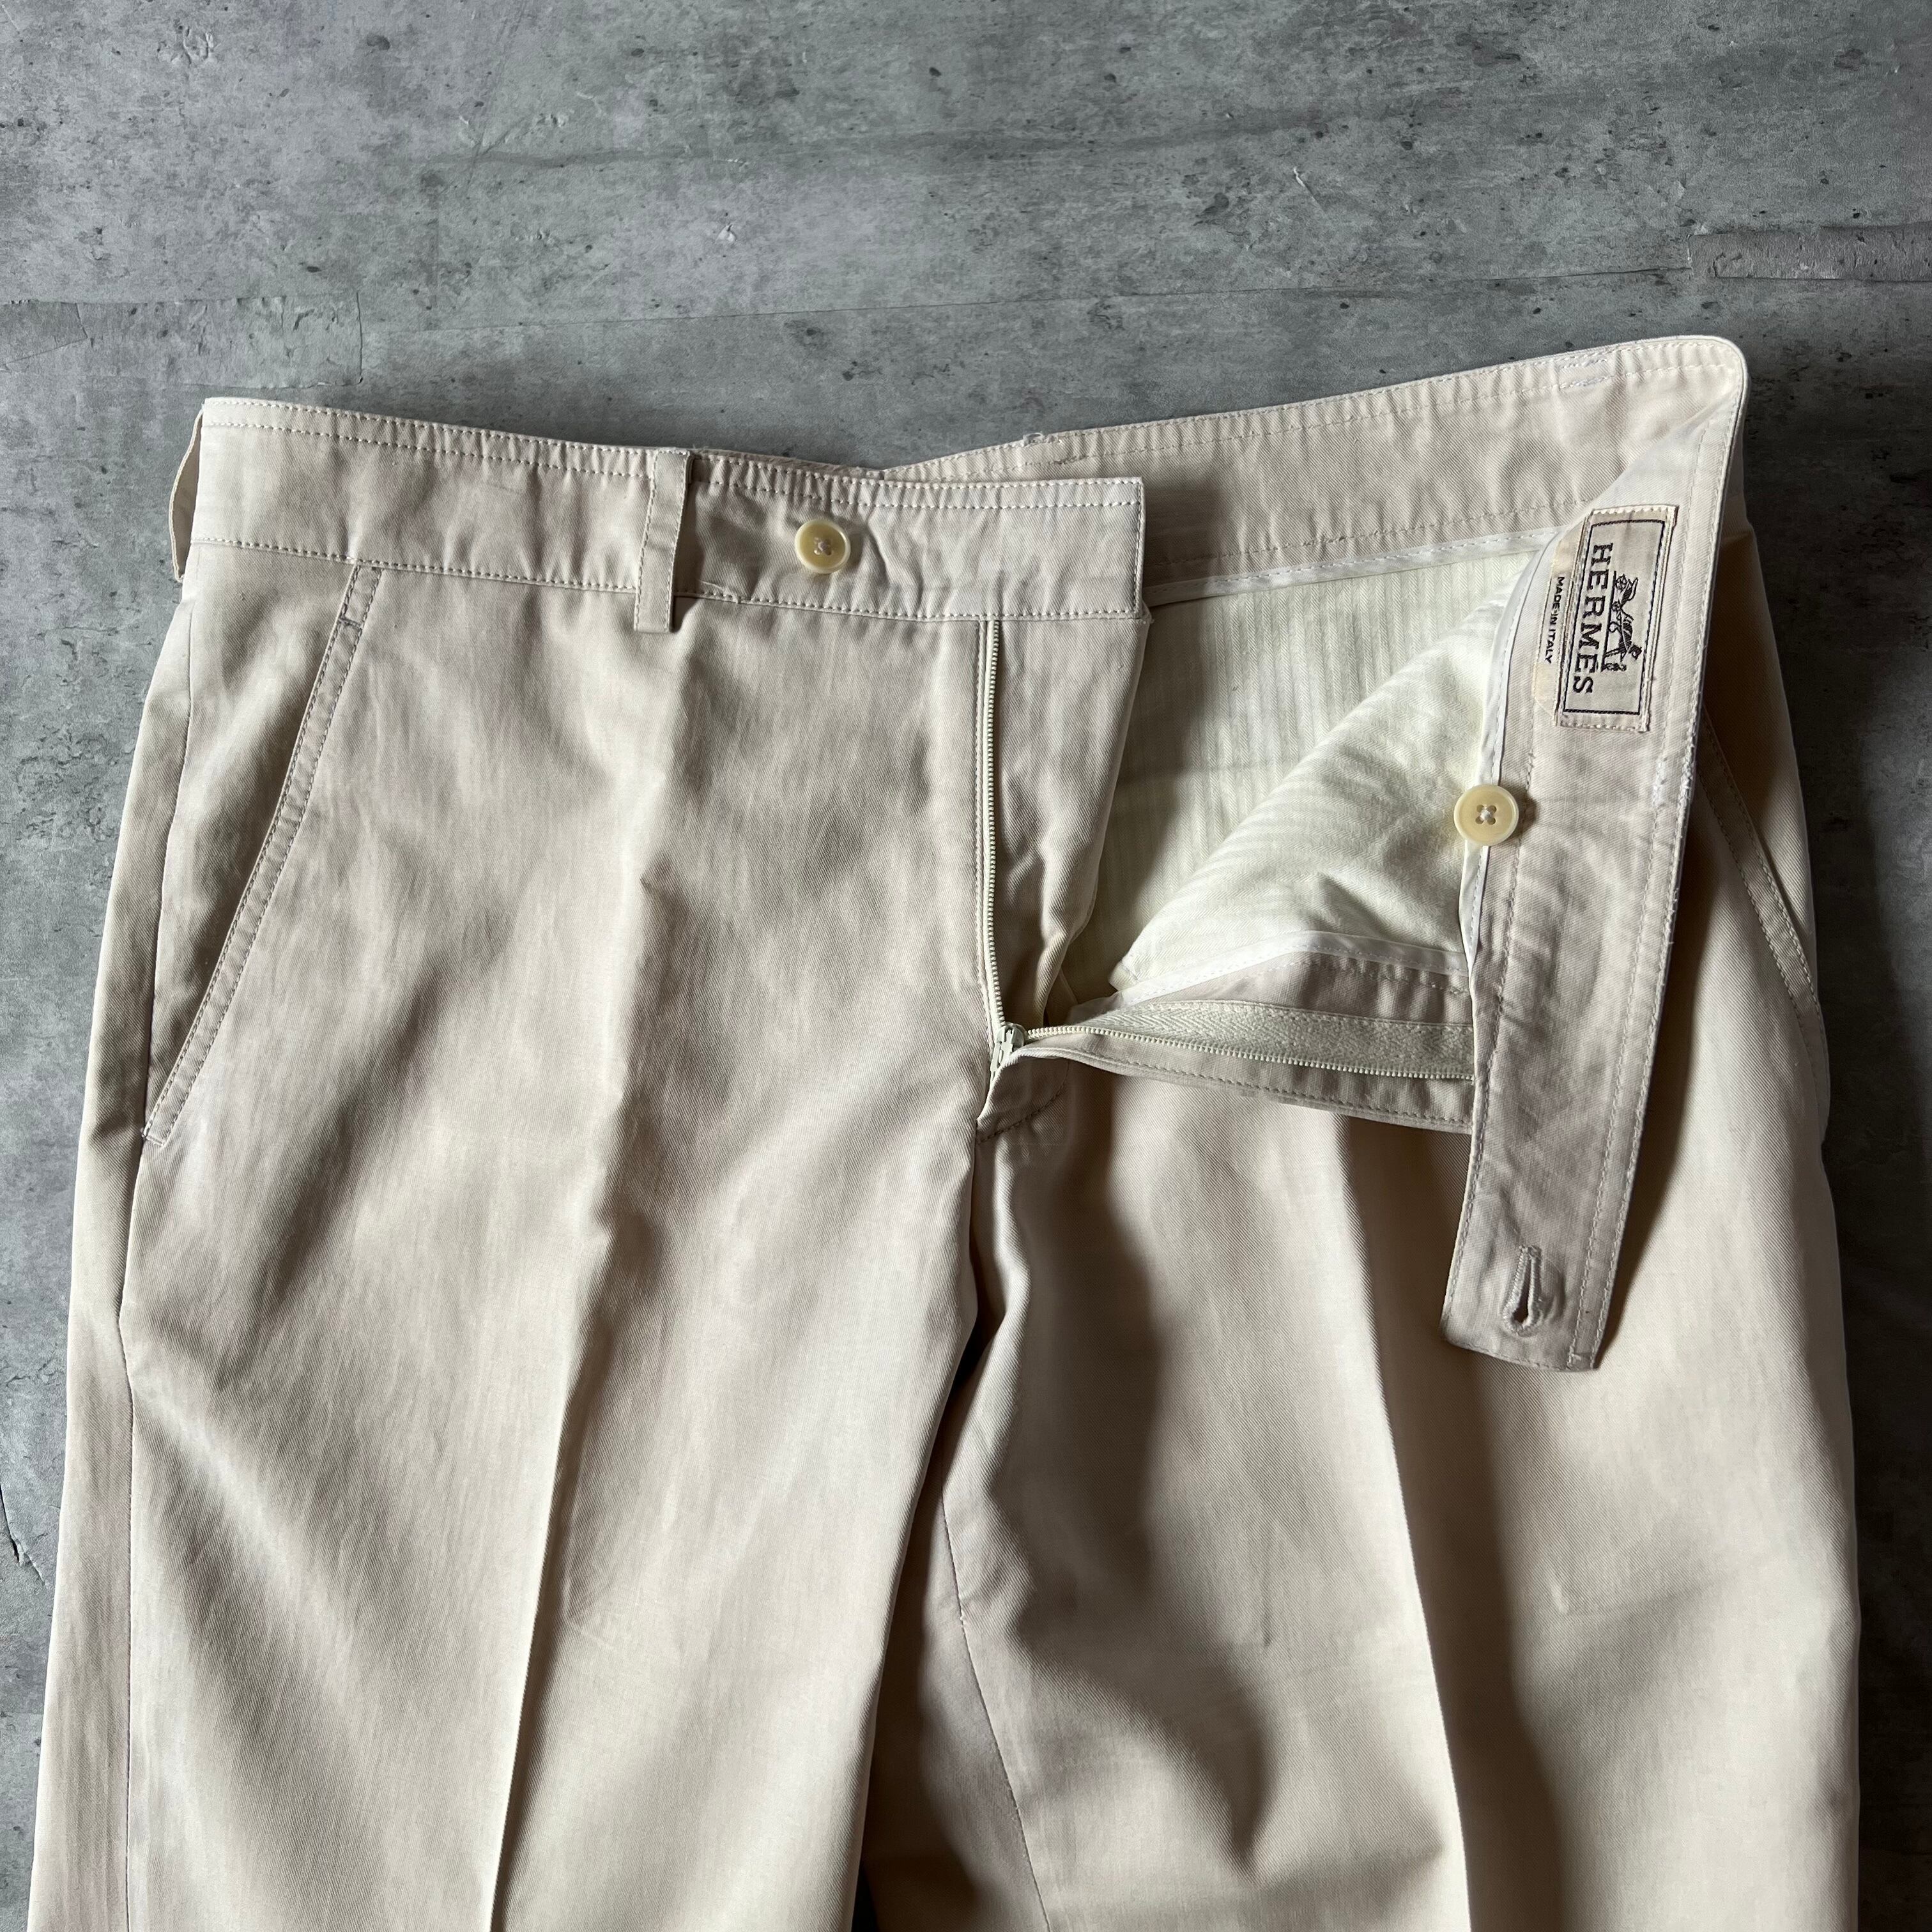 80s “Hermes” W34相当 cotton linen slacks pants made in italy 